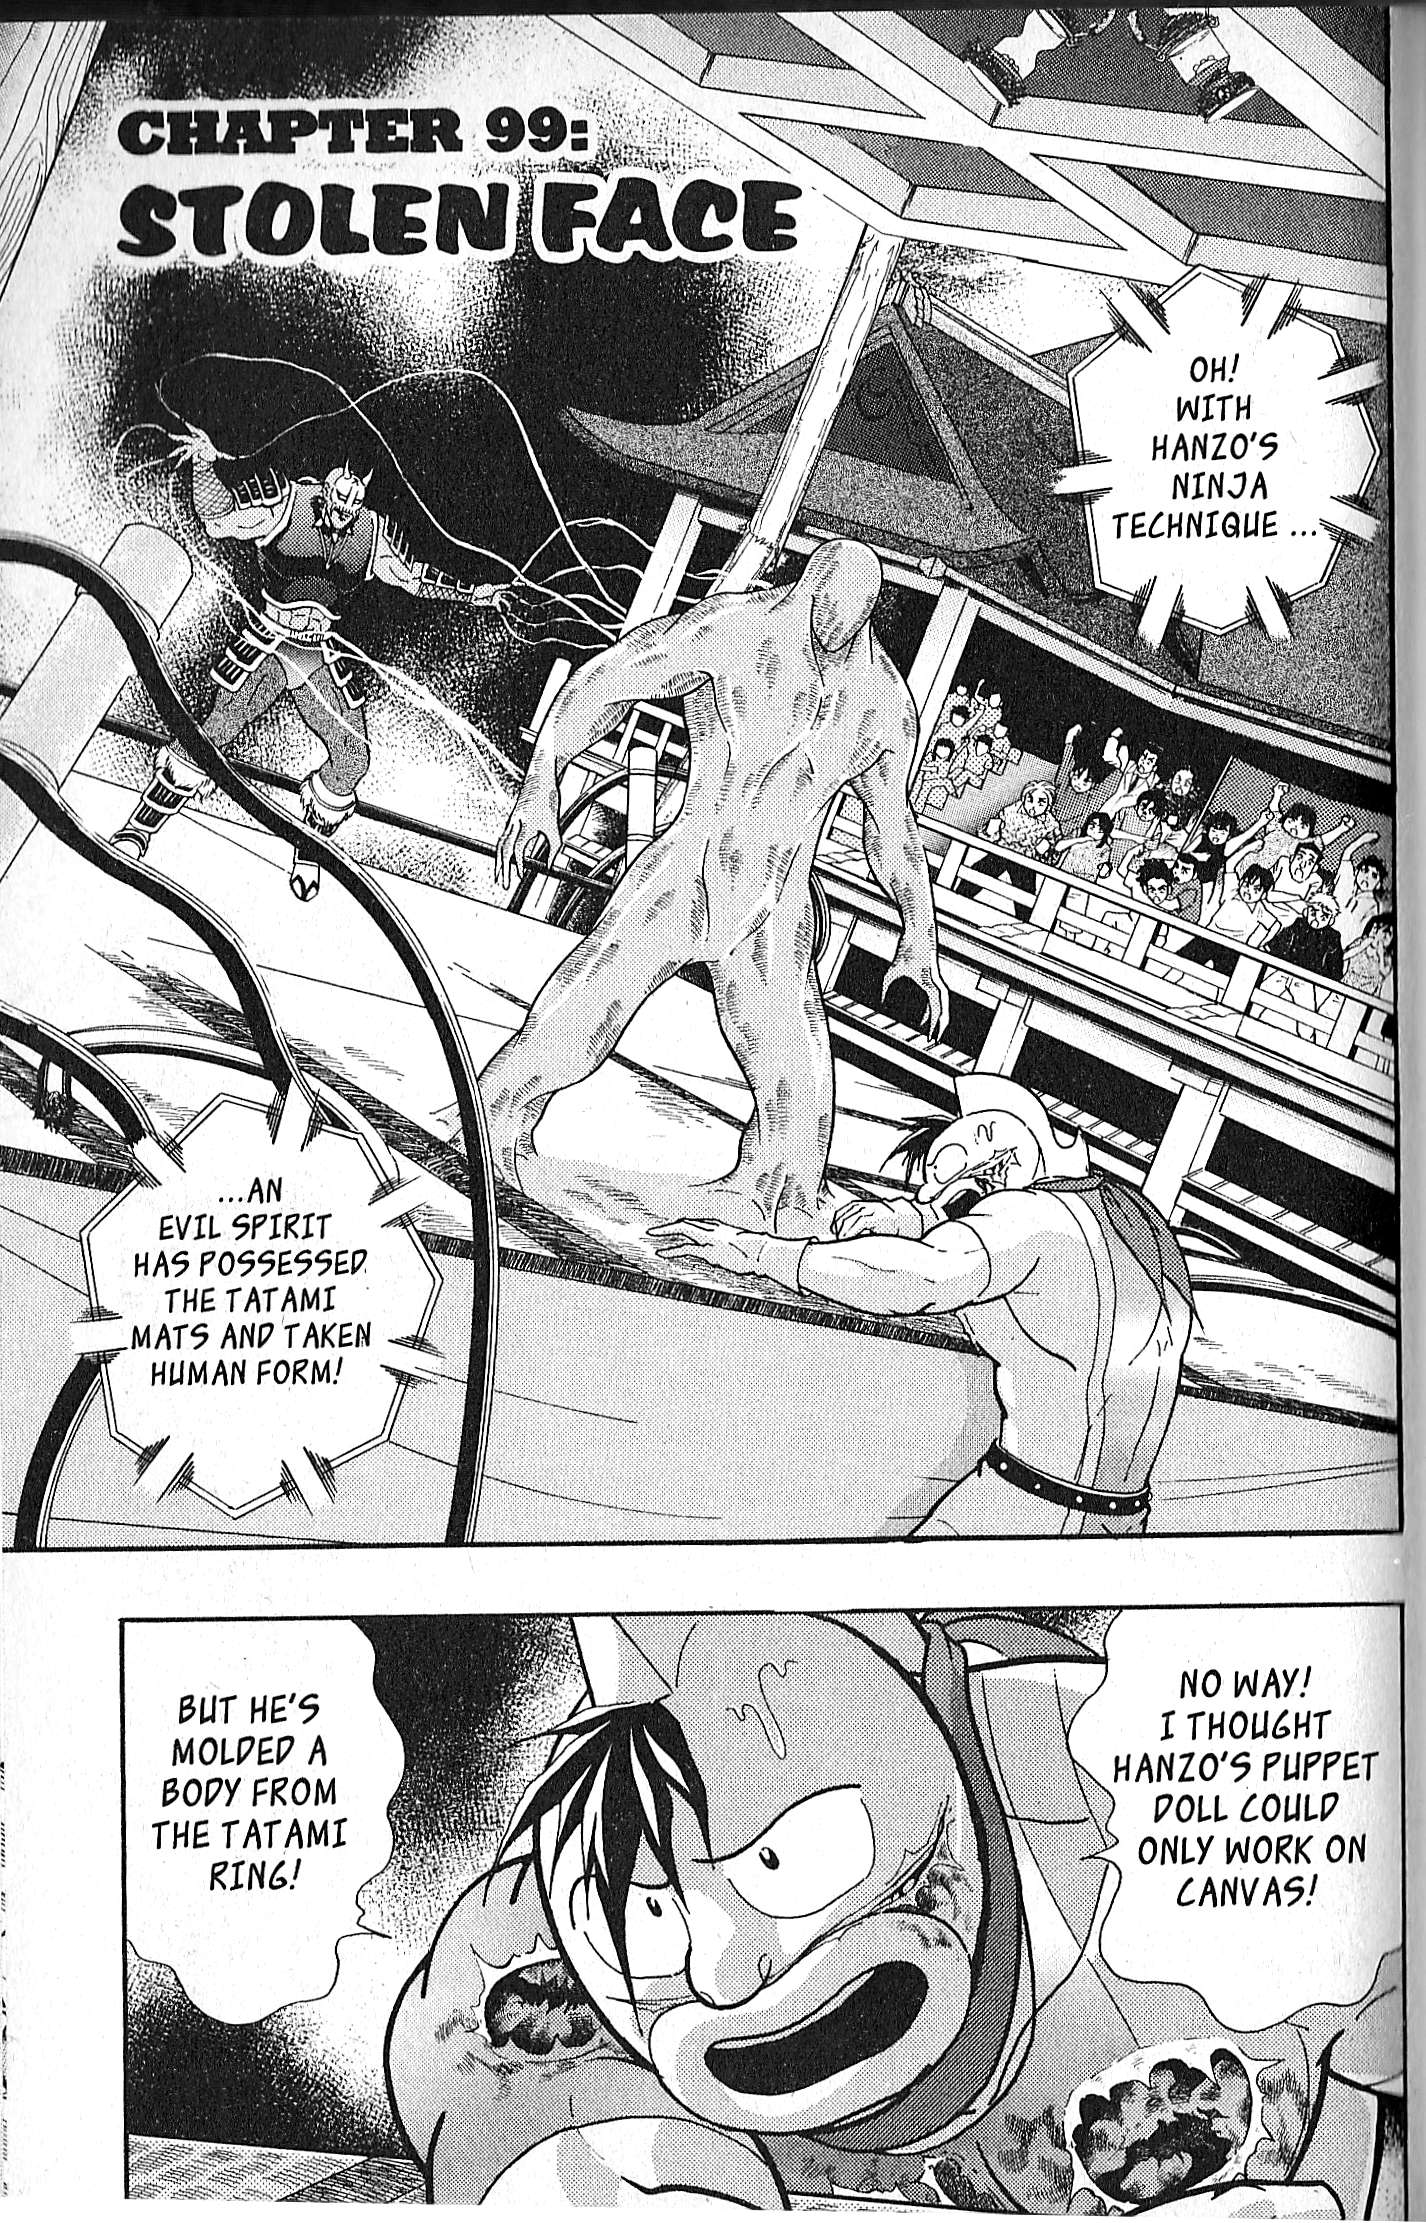 Kinnikuman II Sei - 2nd Generation - chapter 99 - #1